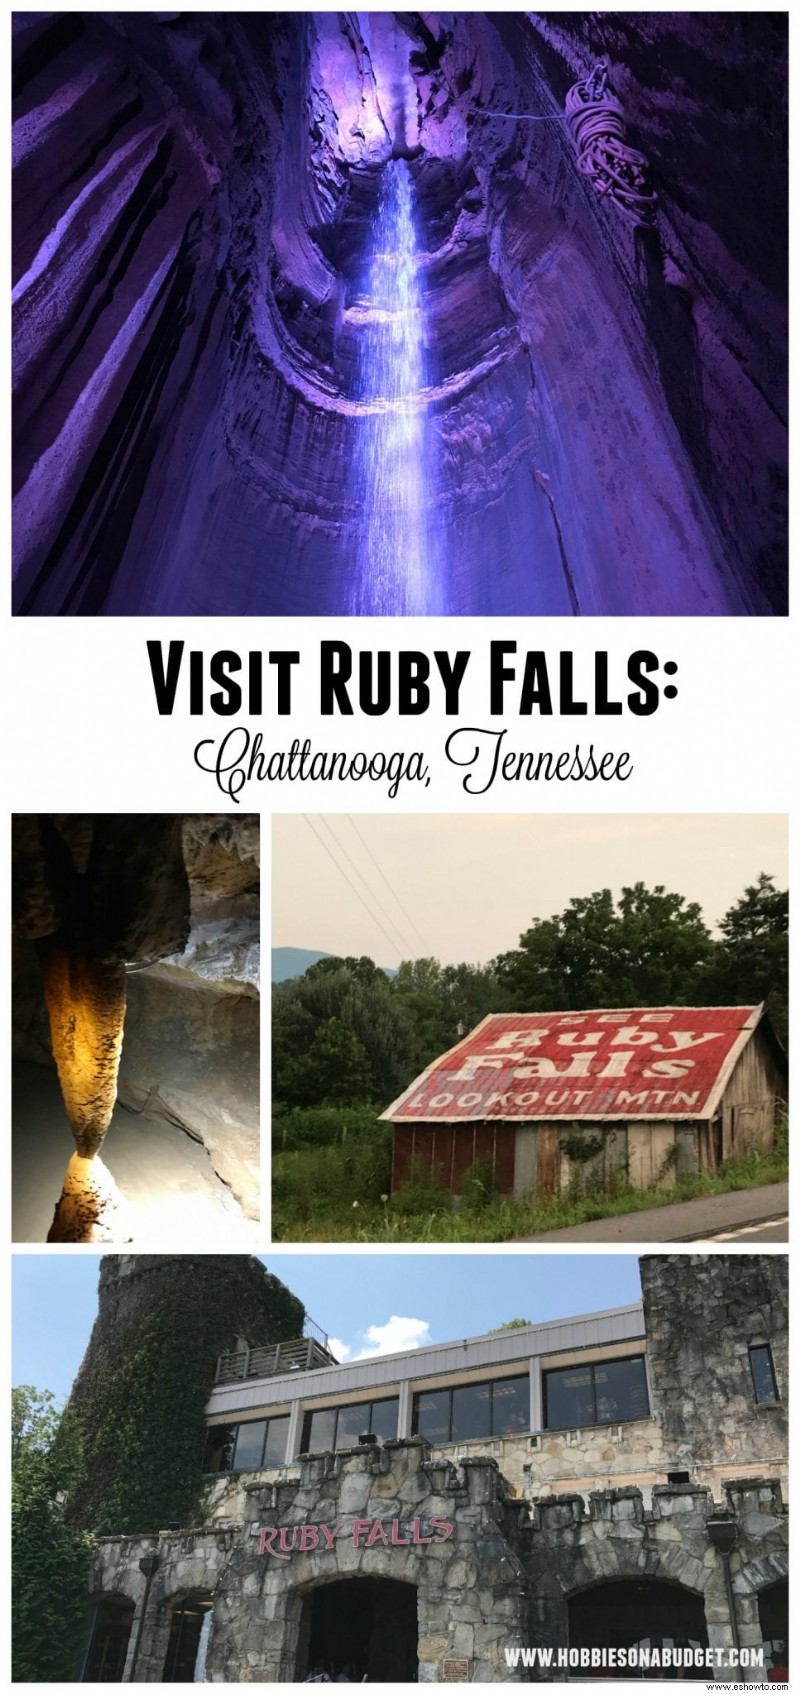 Visita Ruby Falls:Chattanooga, Tennessee